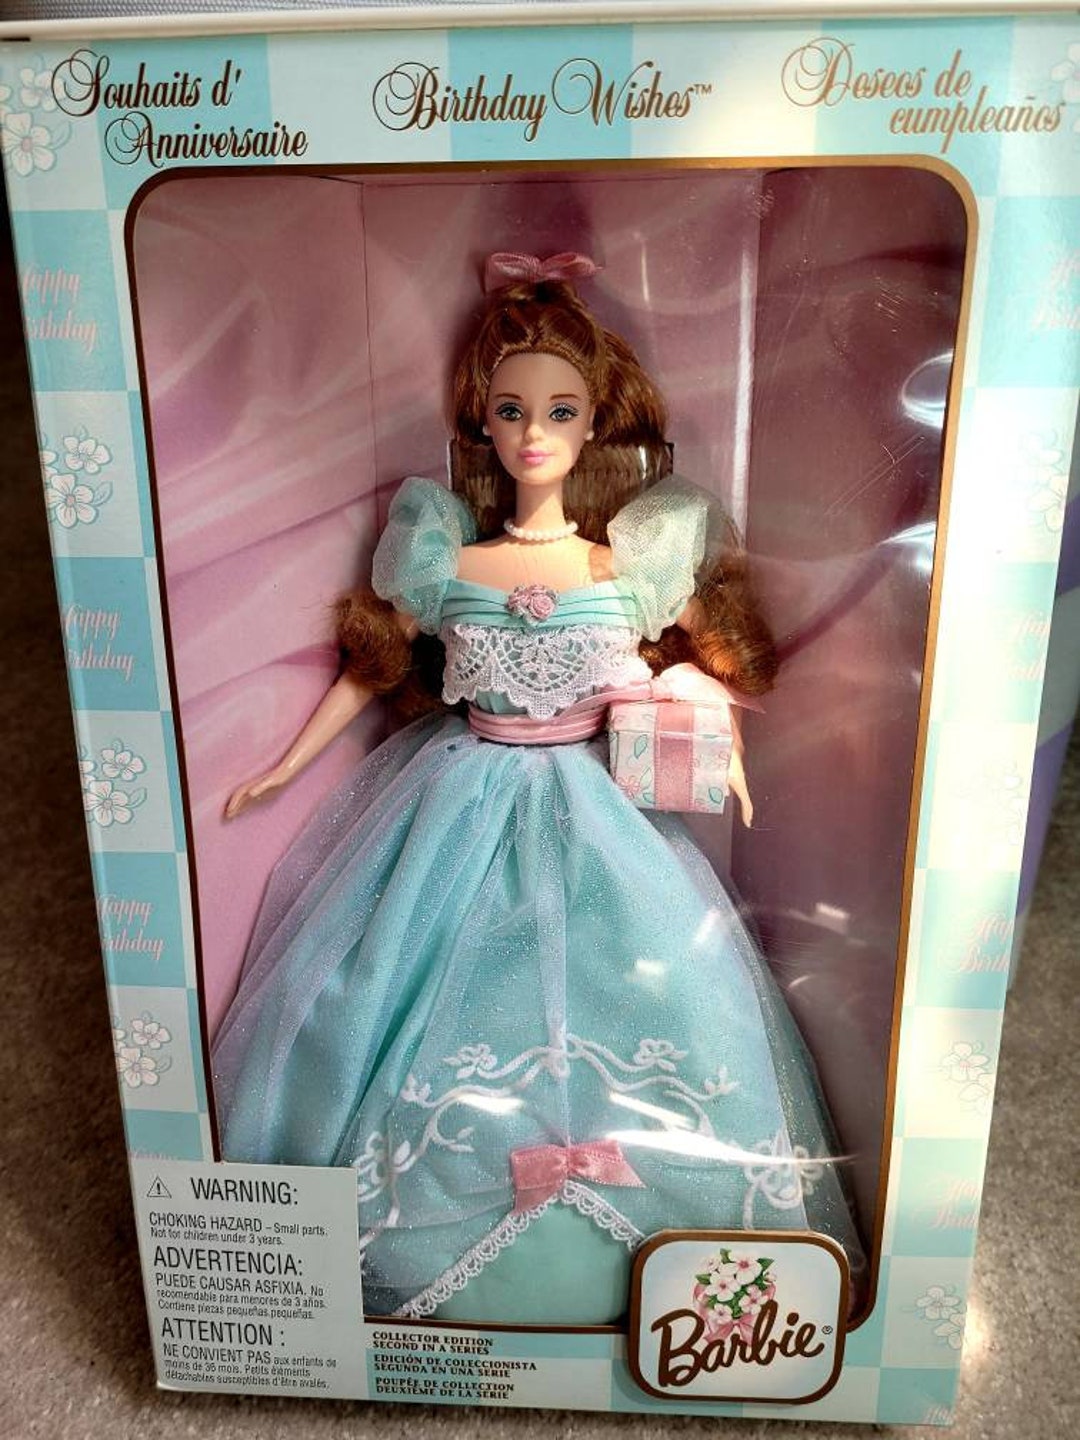 1999 Birthday Wishes Barbie Mattel Collector Edition NIB NRFB - Etsy